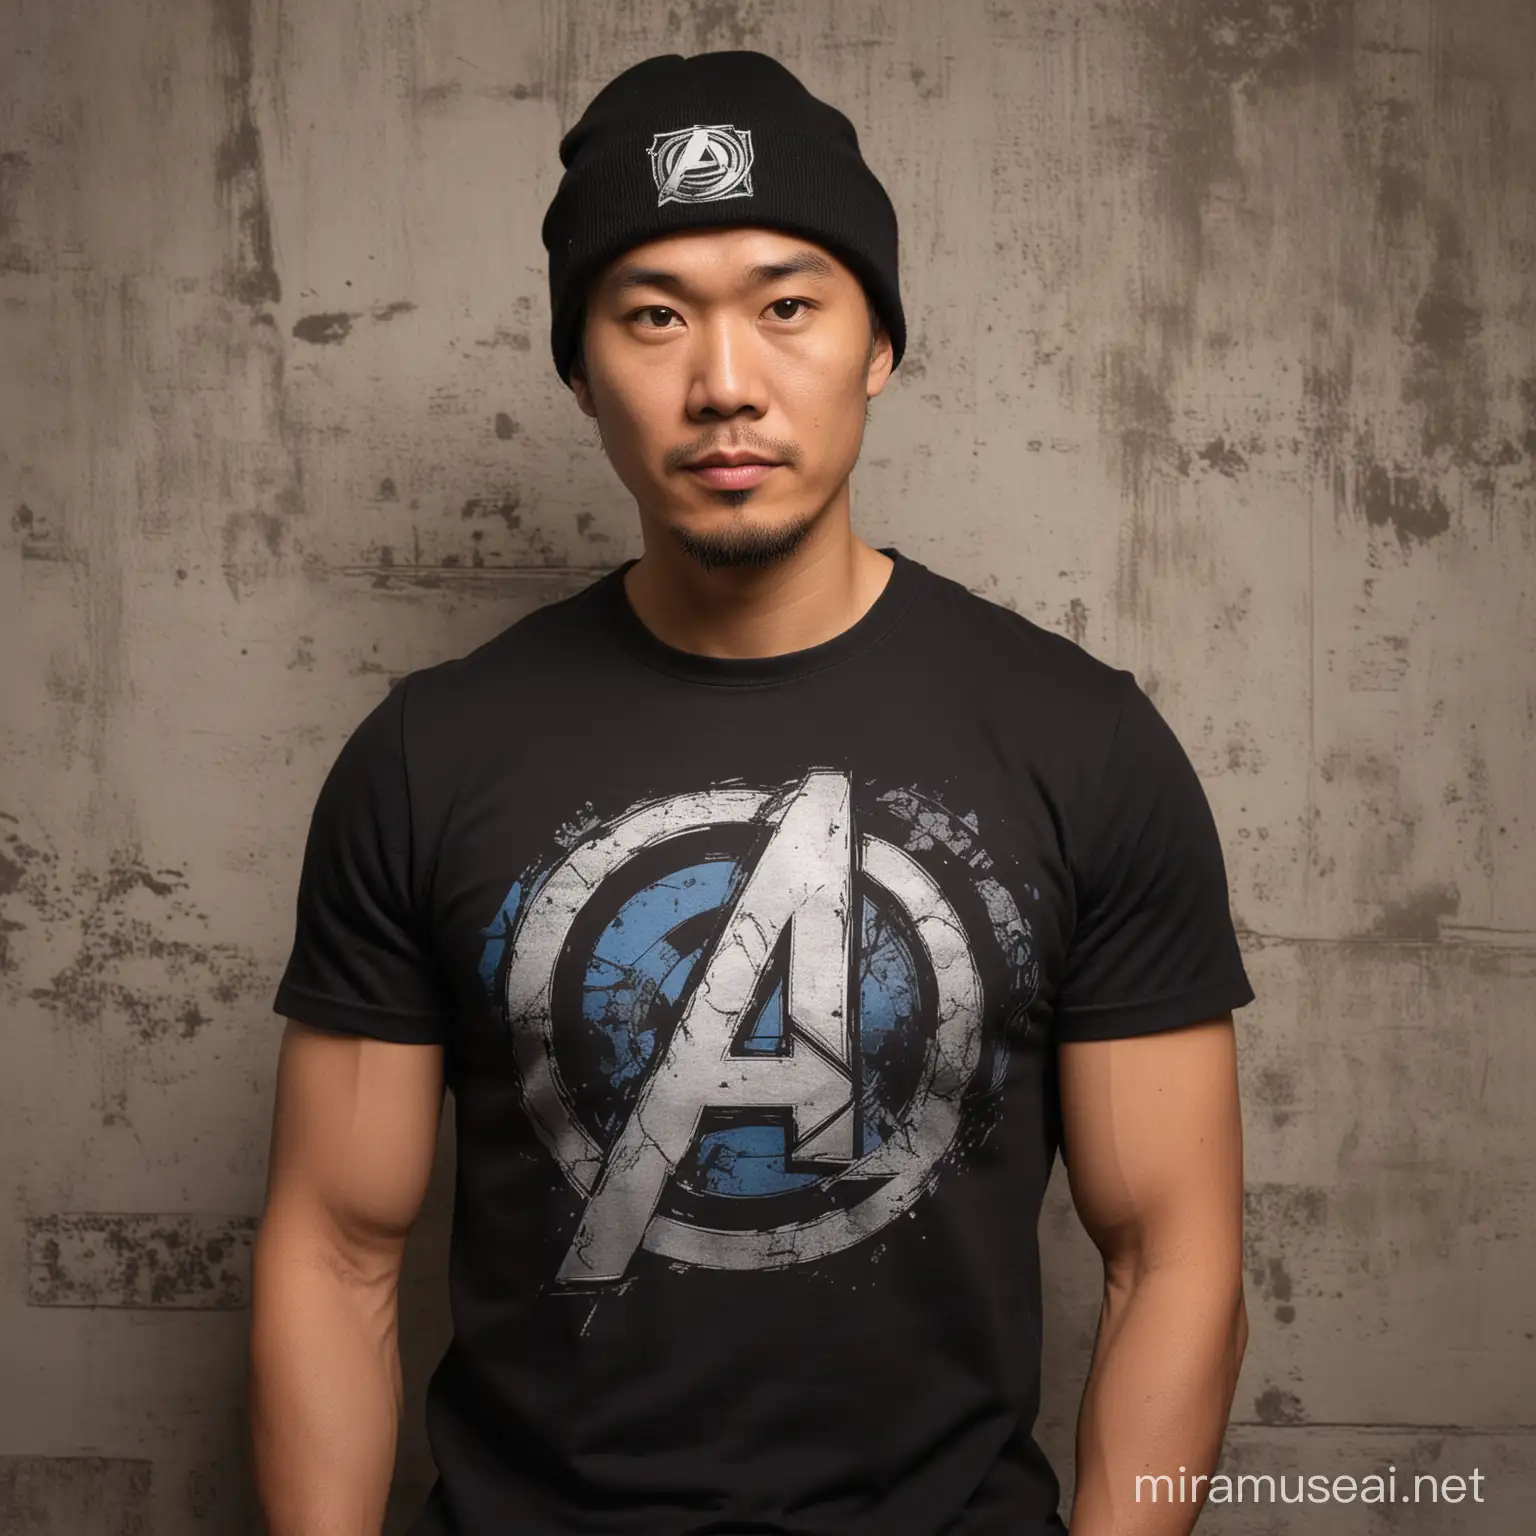 Asian Man in Avengers TShirt and Beanie Against Wall